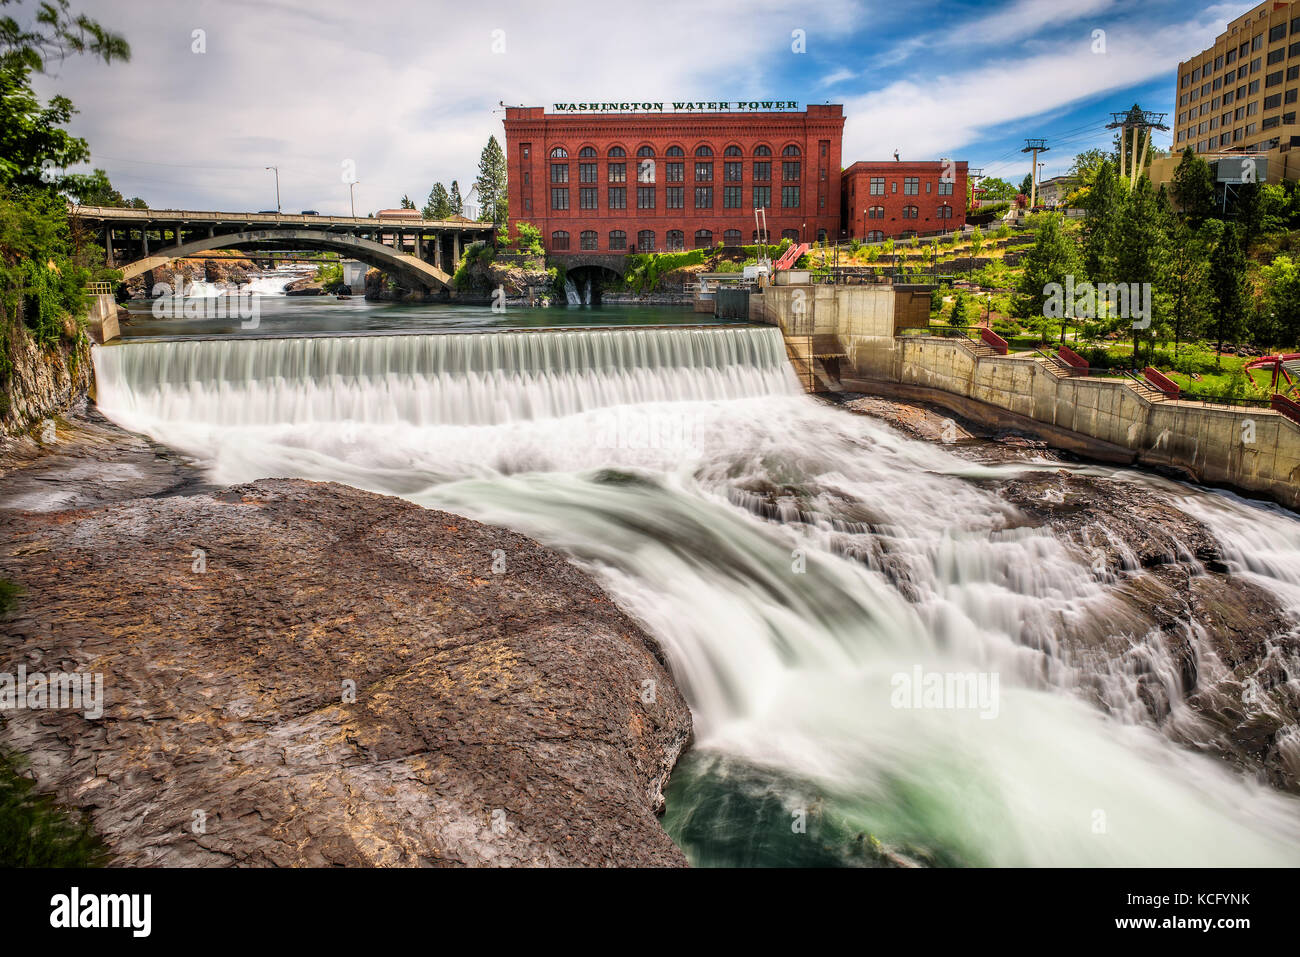 Falls and the Washington Water Power building along the Spokane river Stock Photo